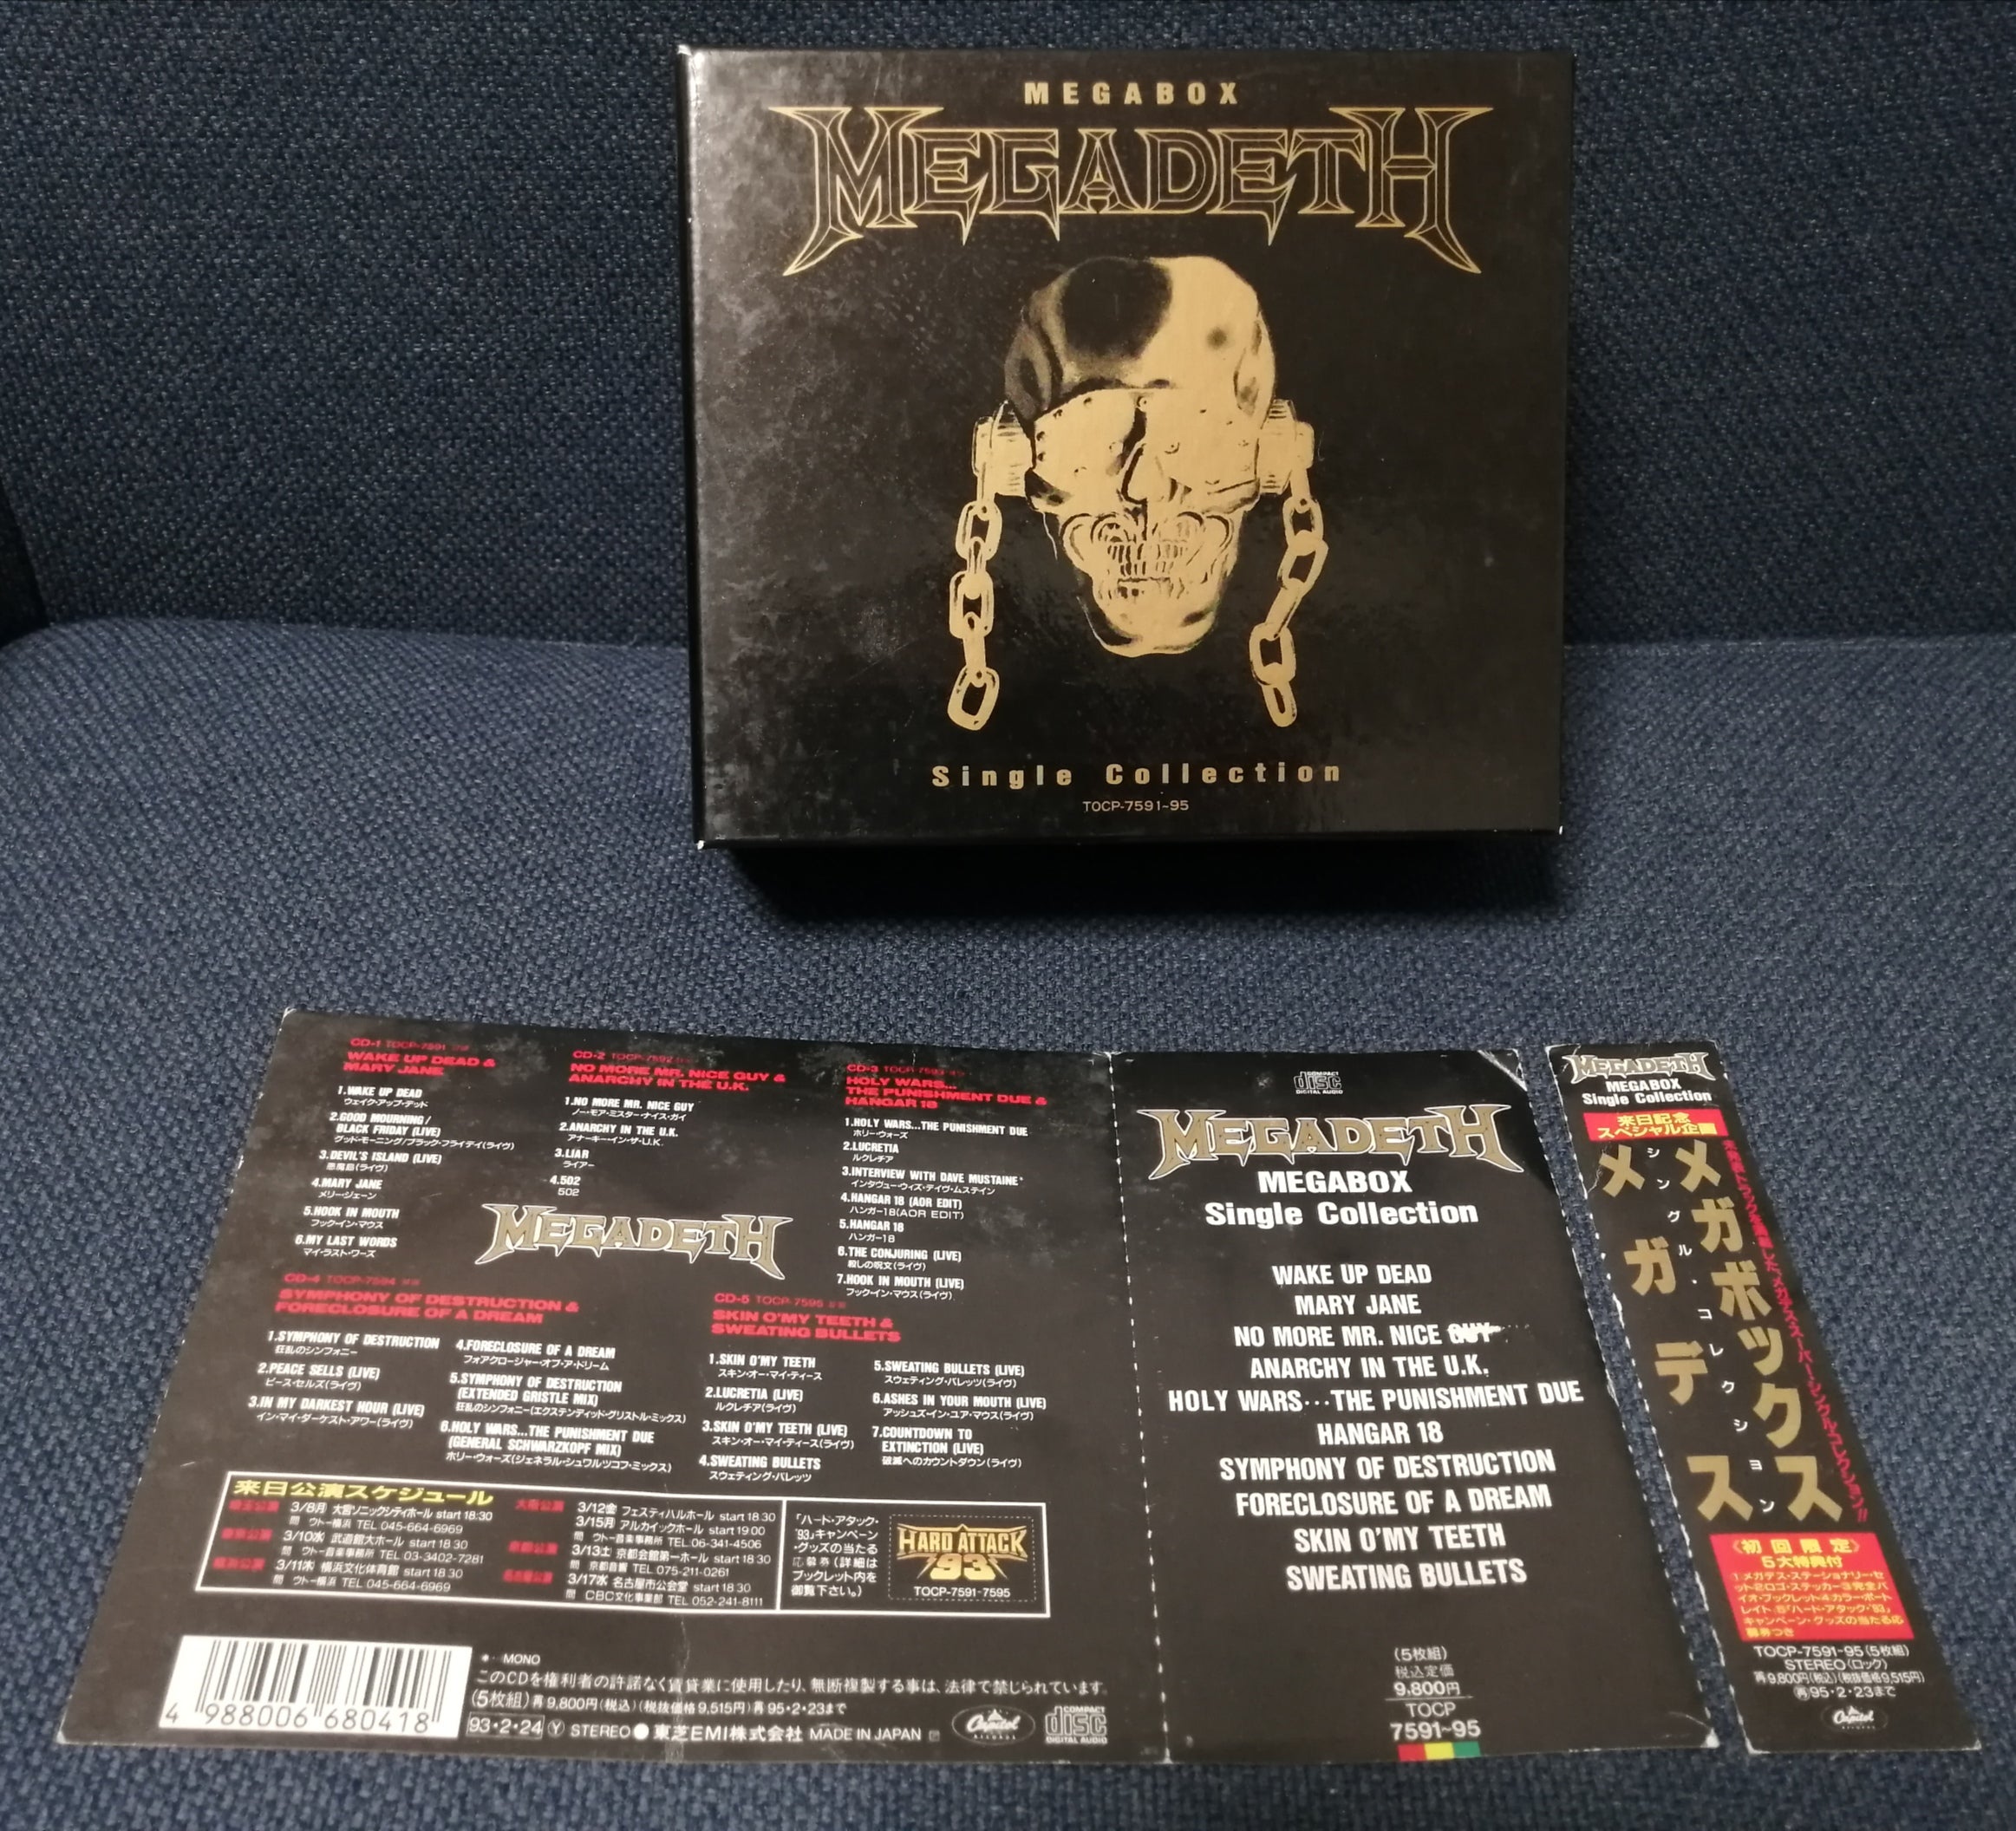 Megadeth - Megabox Single Collection Box Set 5CD